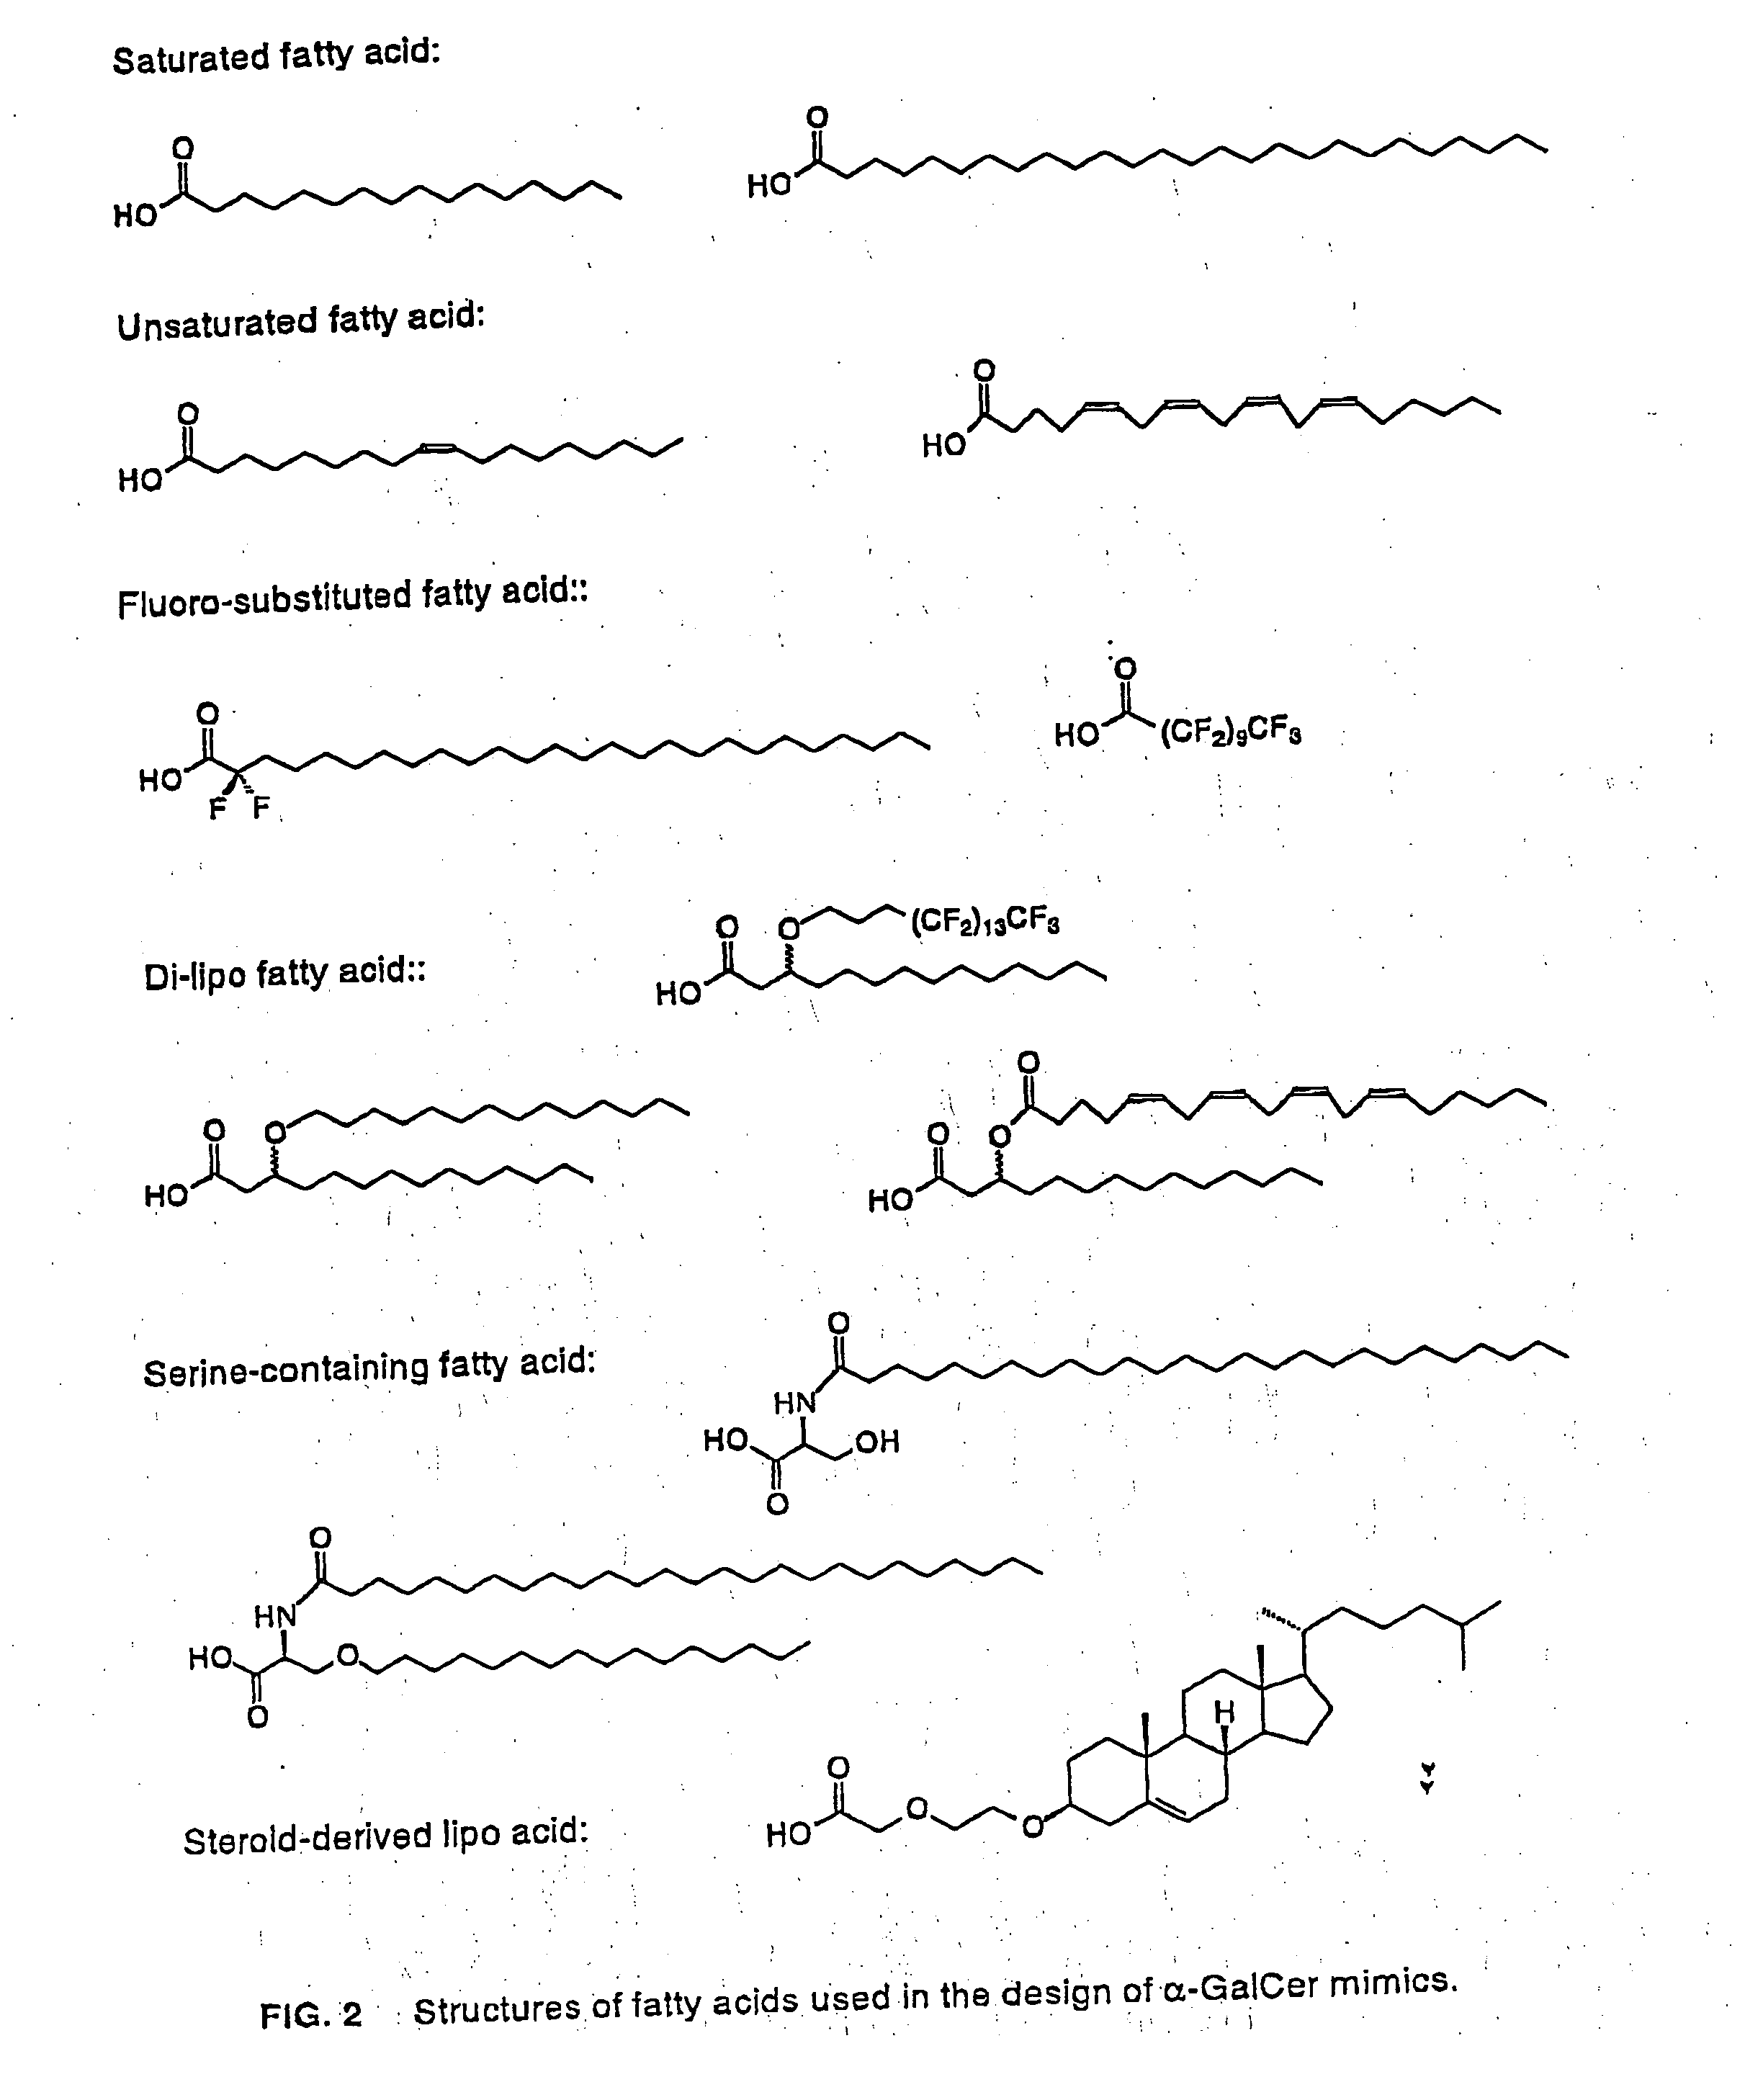 Glycosylceramide analogues